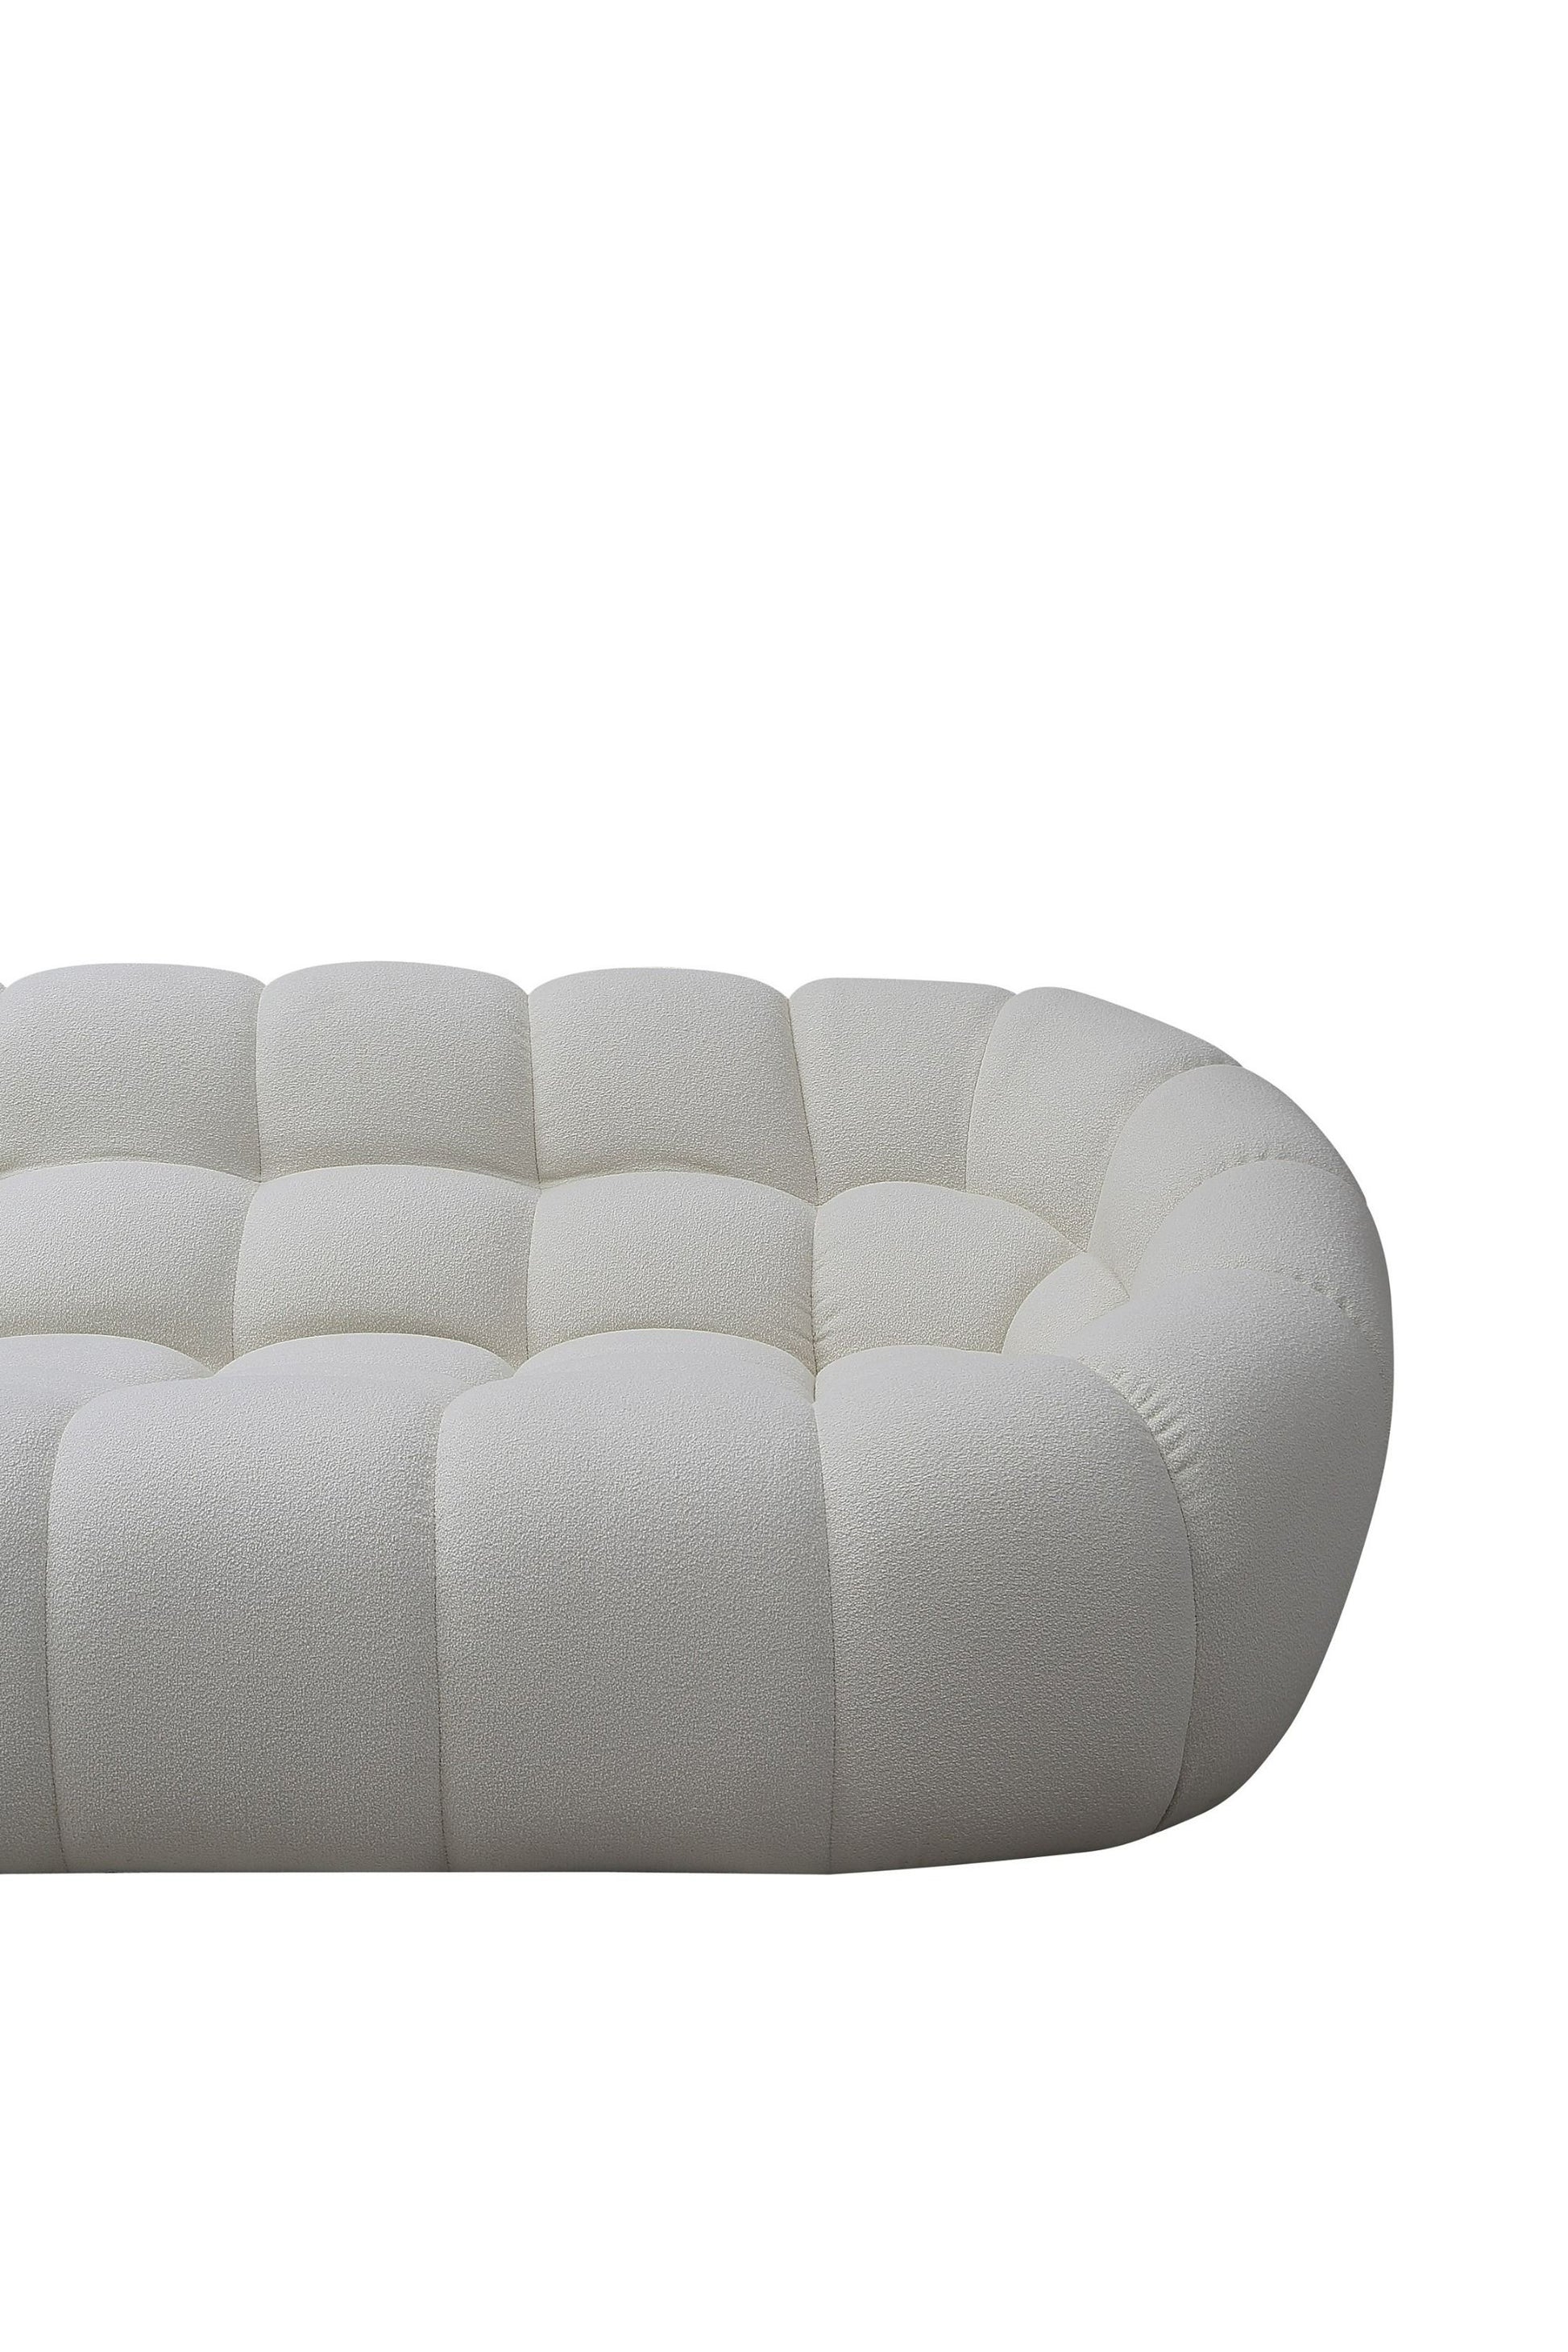 Divani Casa Yolonda Off-White Fabric Sectional Sofa Alt 08